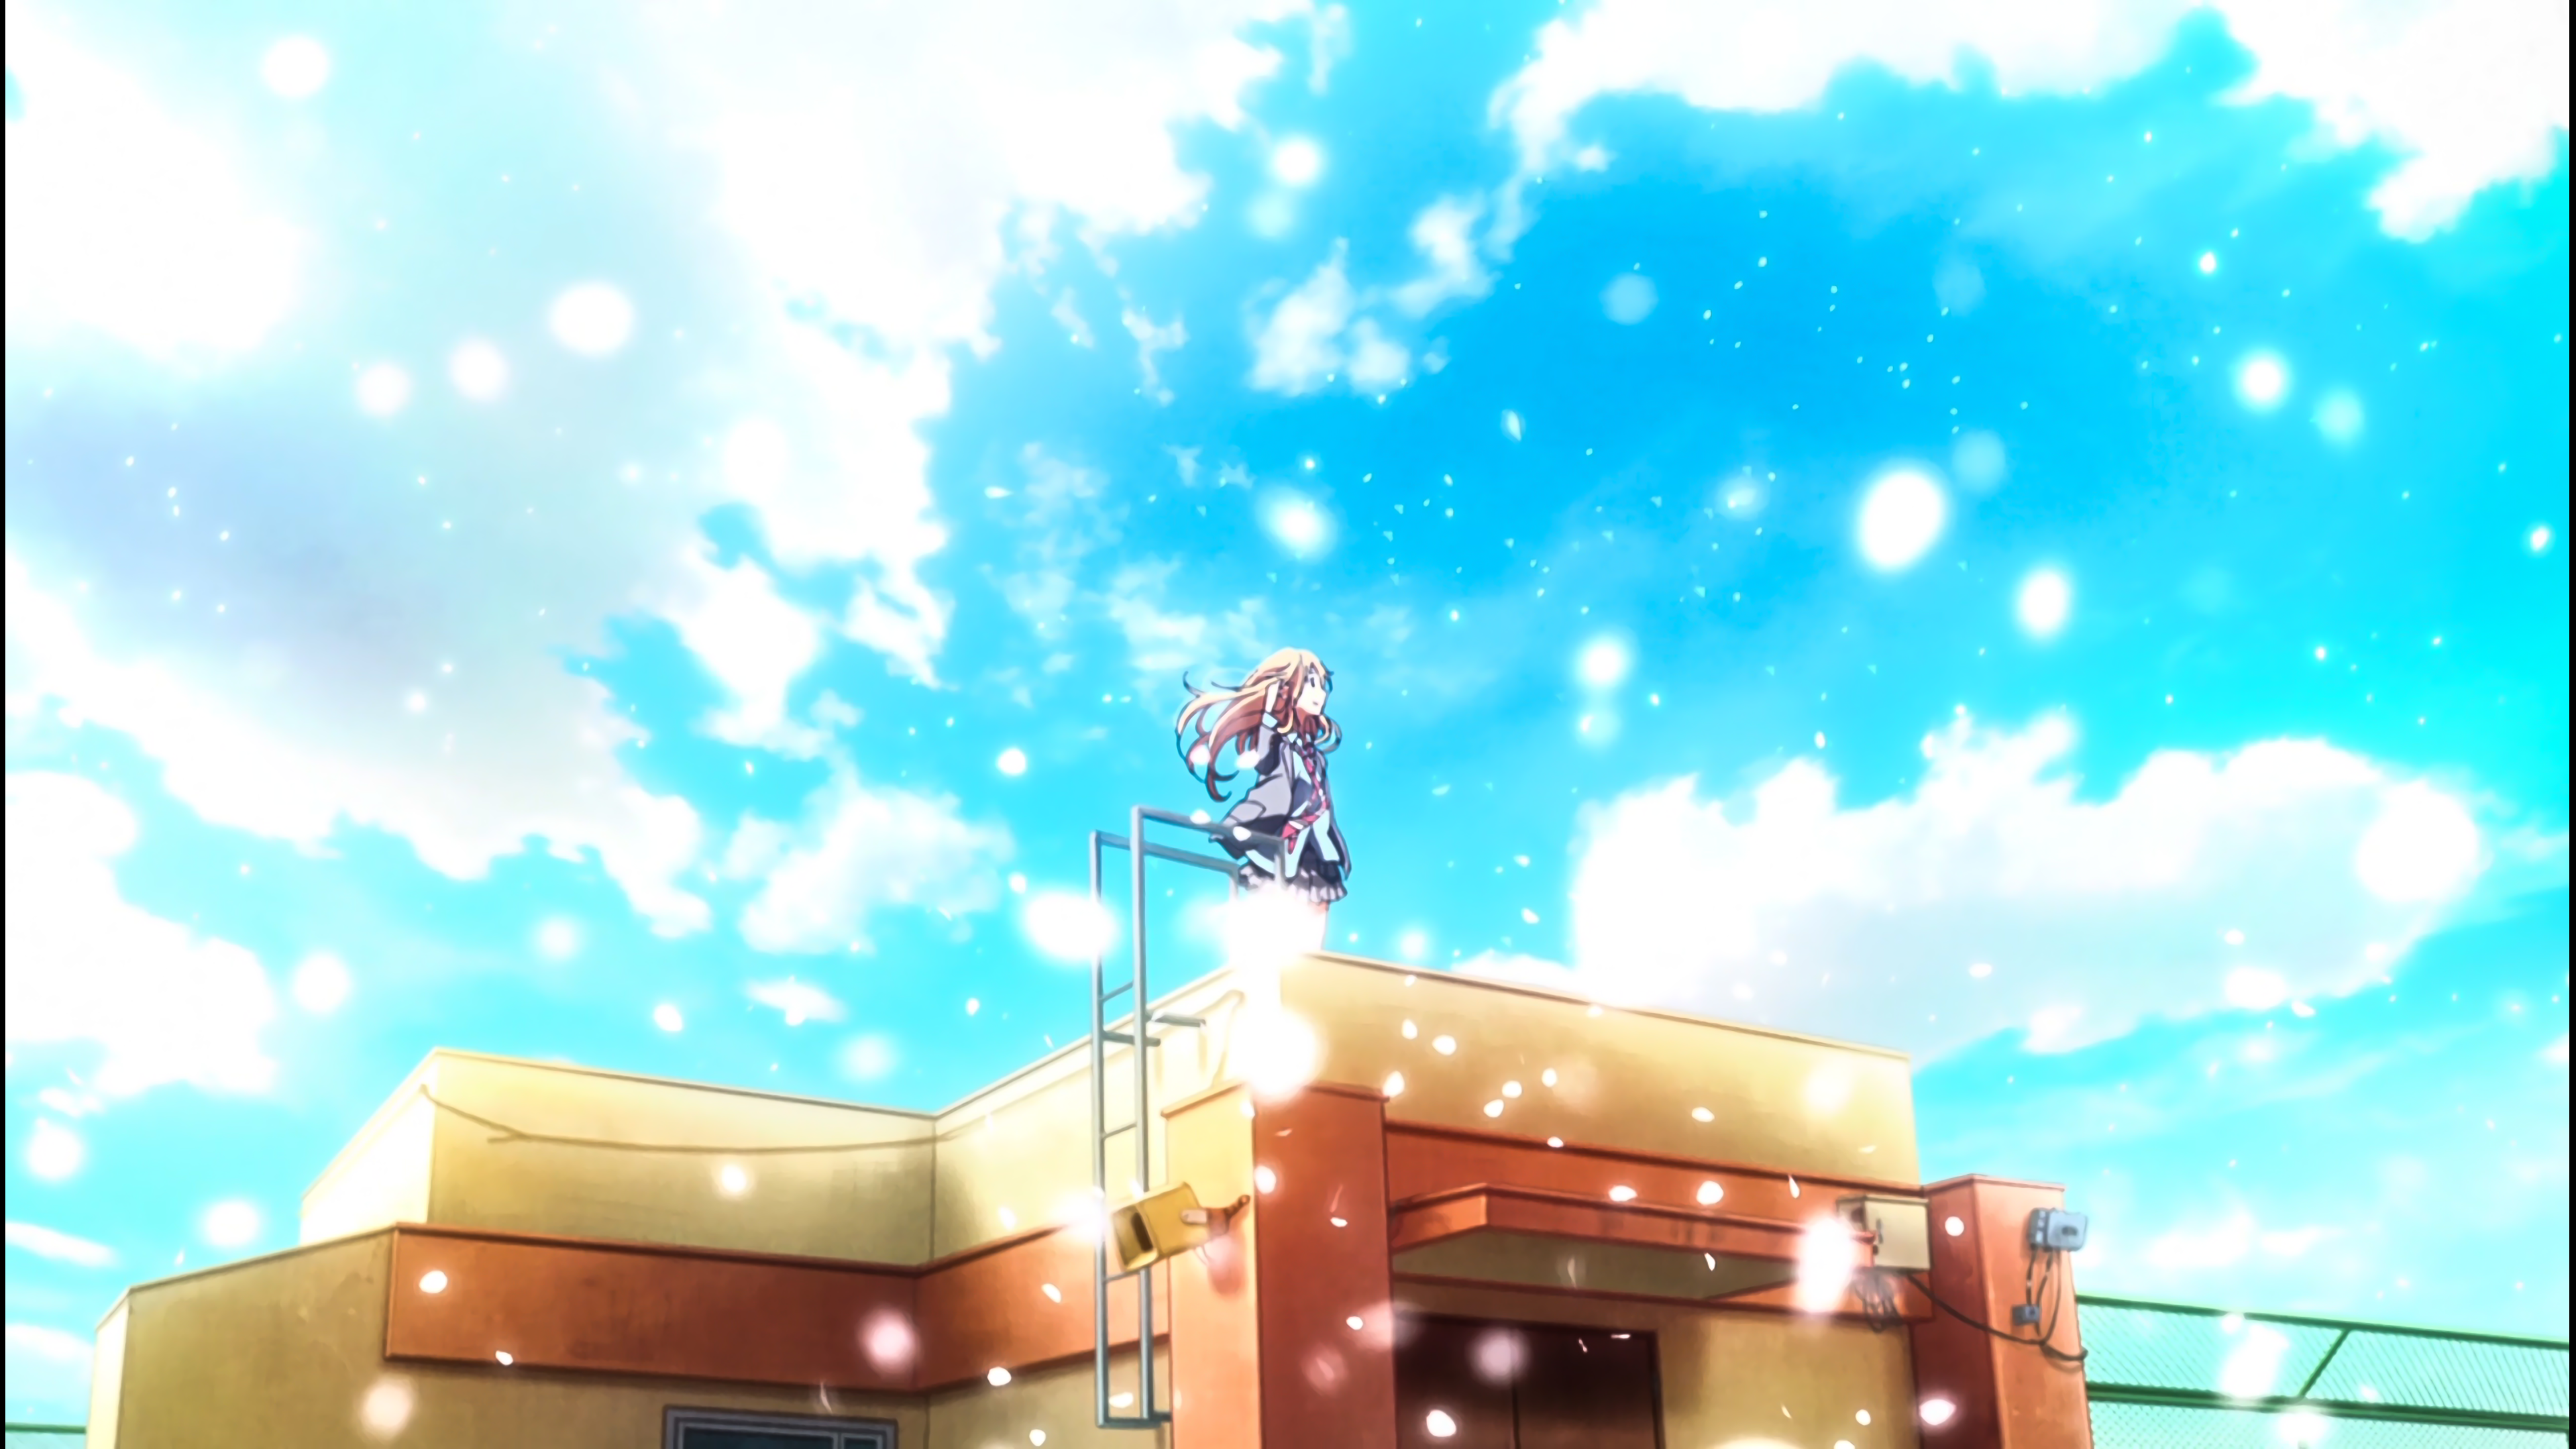 Anime 3840x2160 Shigatsu wa Kimi no Uso anime girls anime house cyan sky rooftops women outdoors